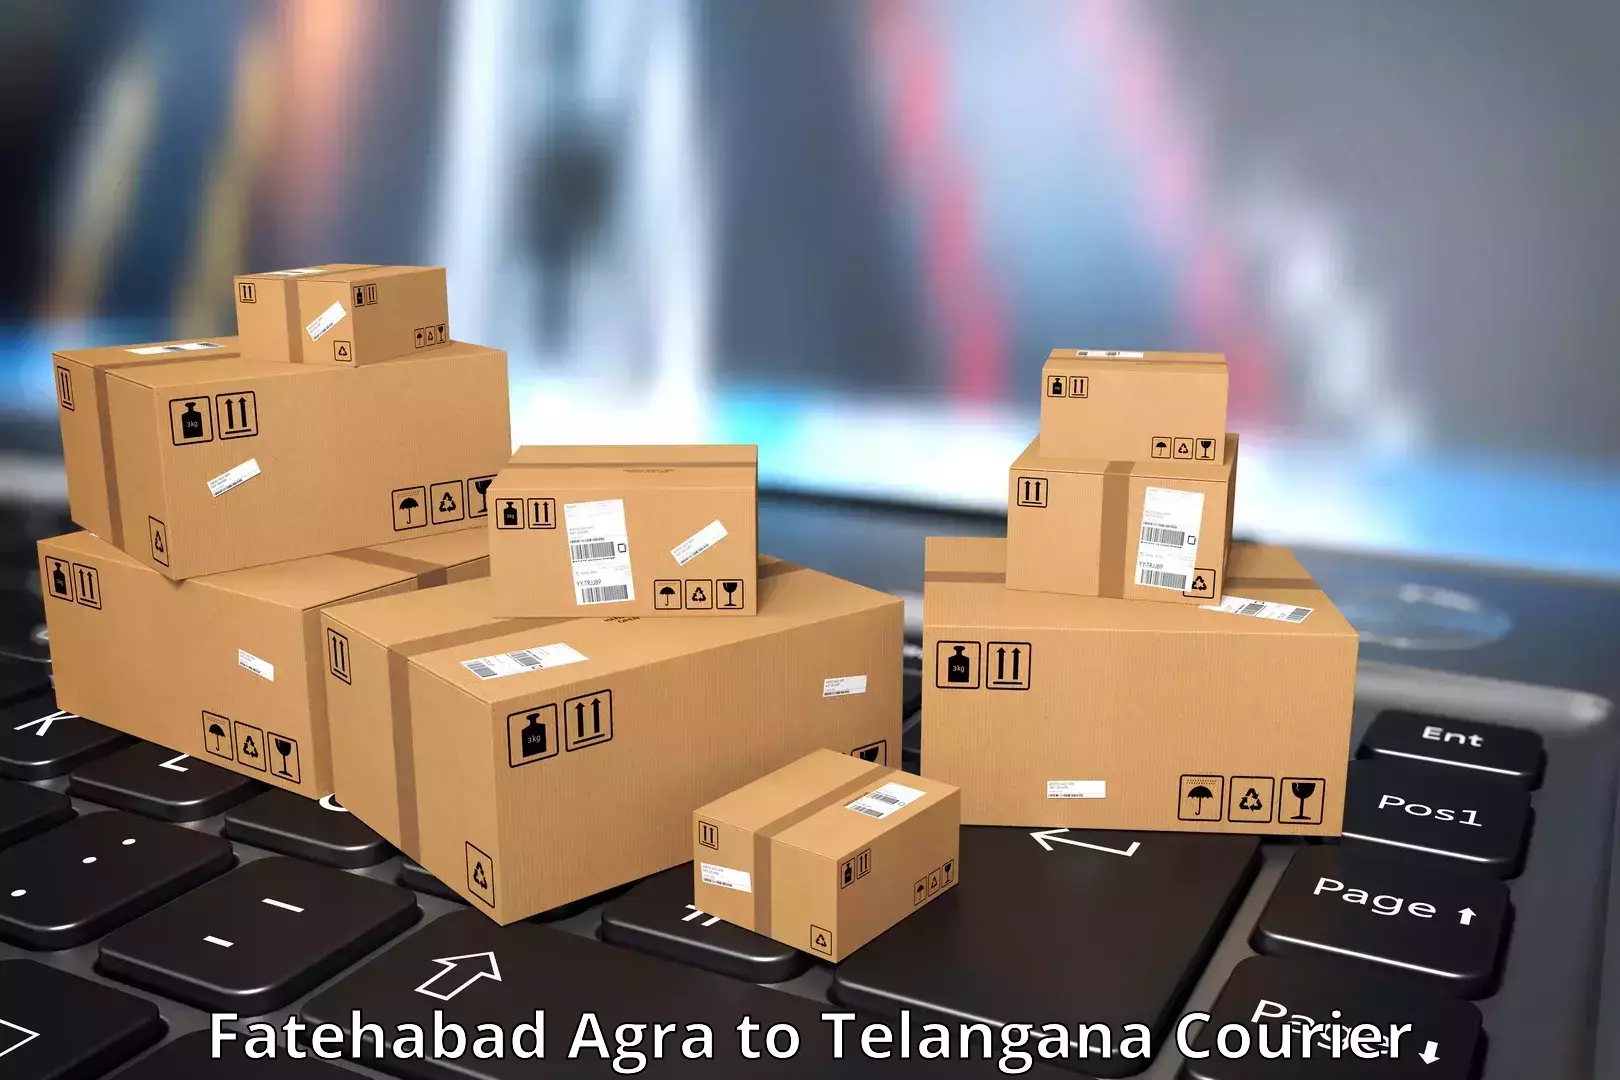 Tech-enabled shipping Fatehabad Agra to Karimnagar